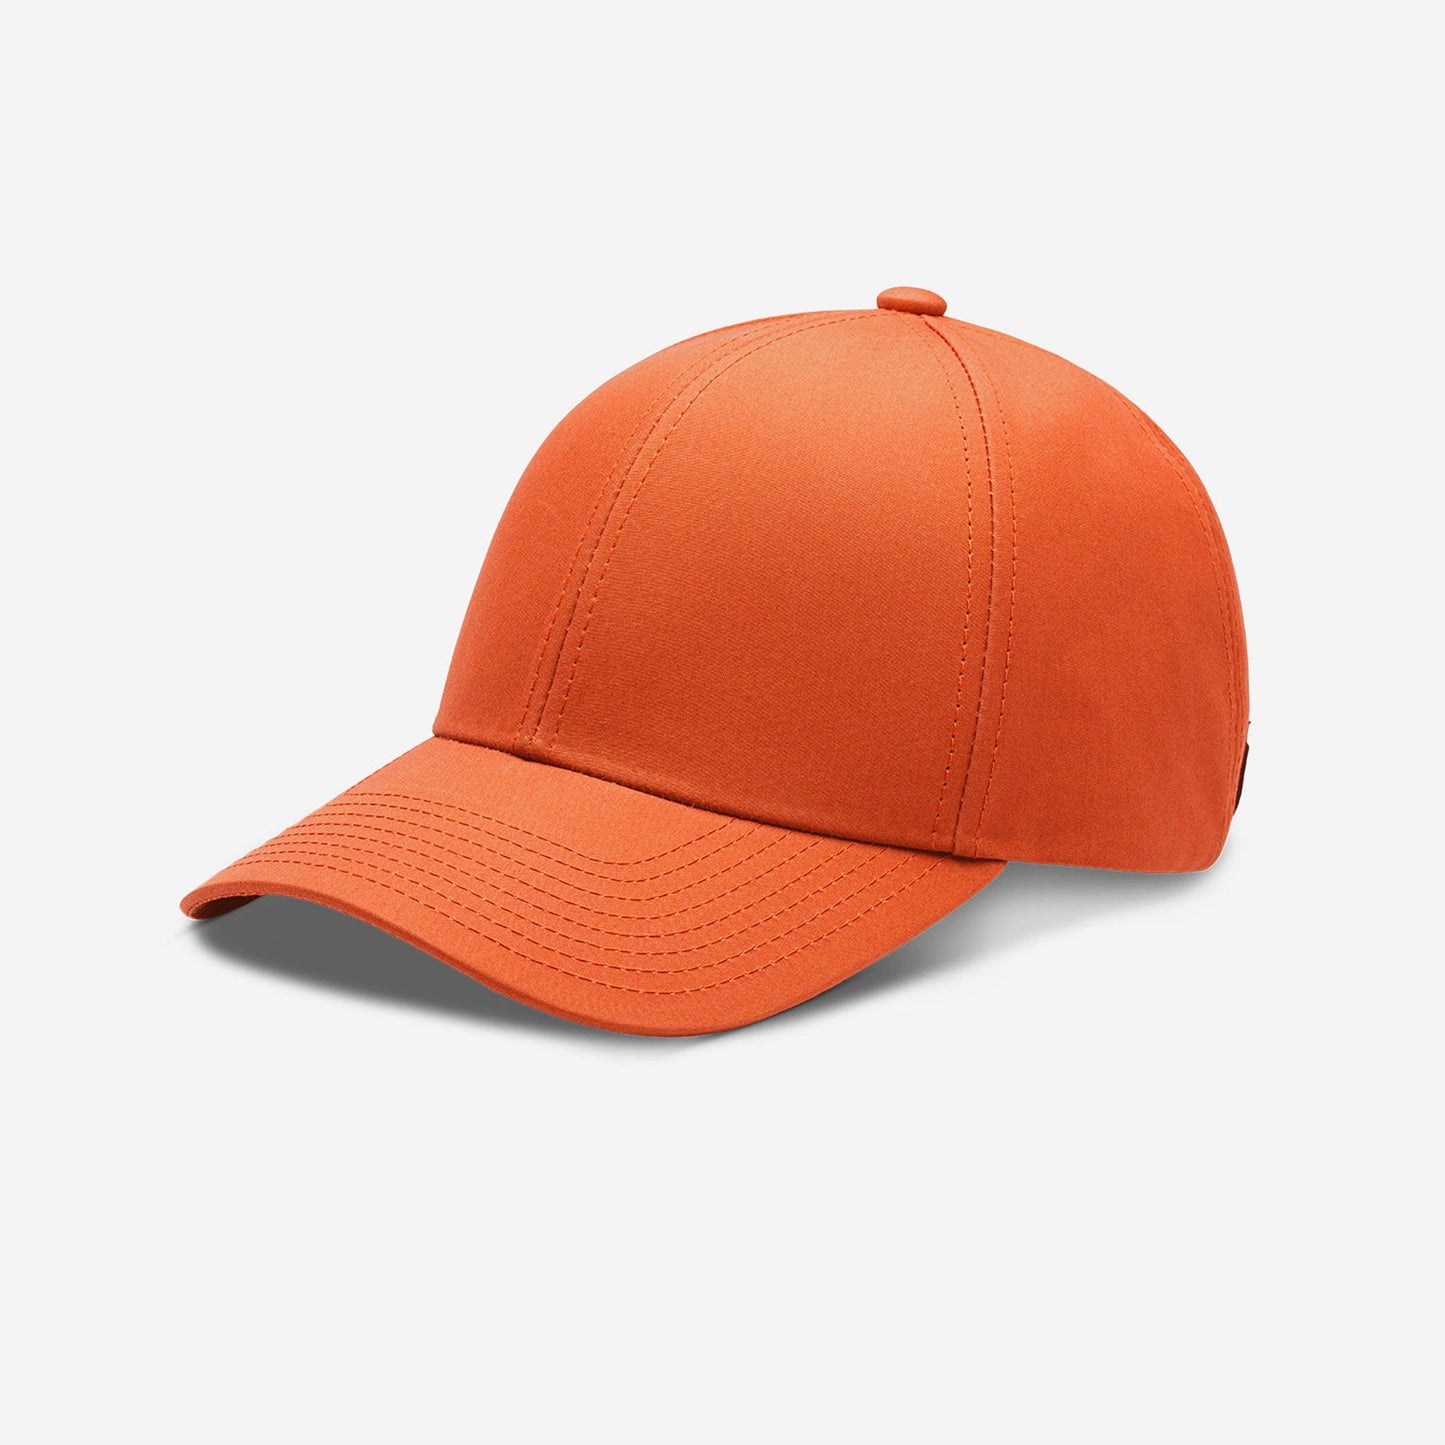 Waterproof All Weather Baseball Cap, Orange